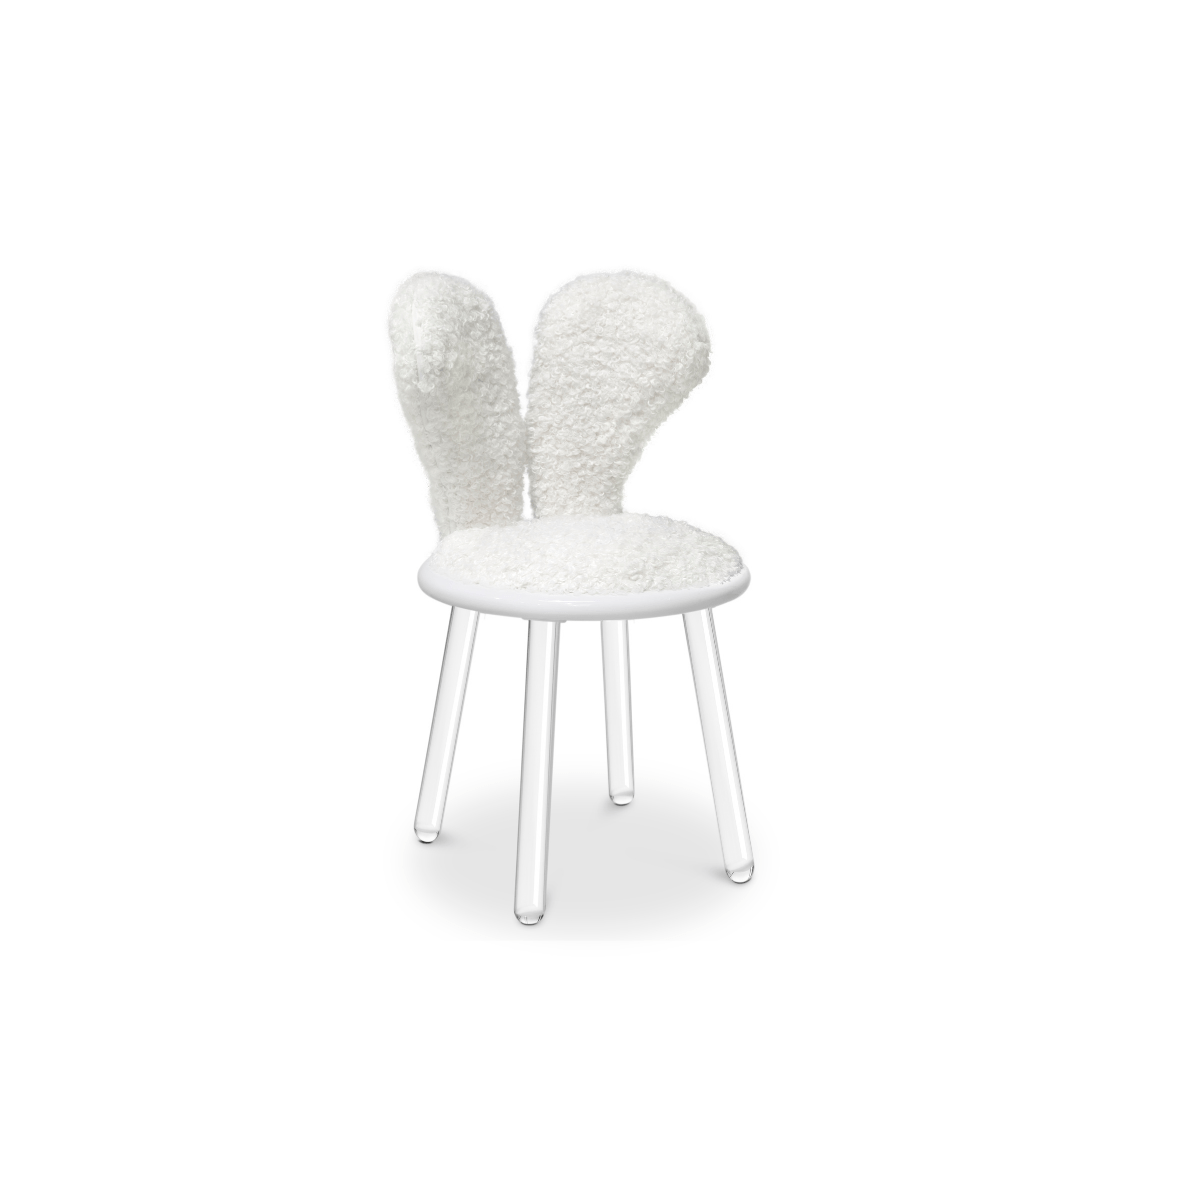 Design sem nome 2021 05 28T100721 Little Mermaid Chair